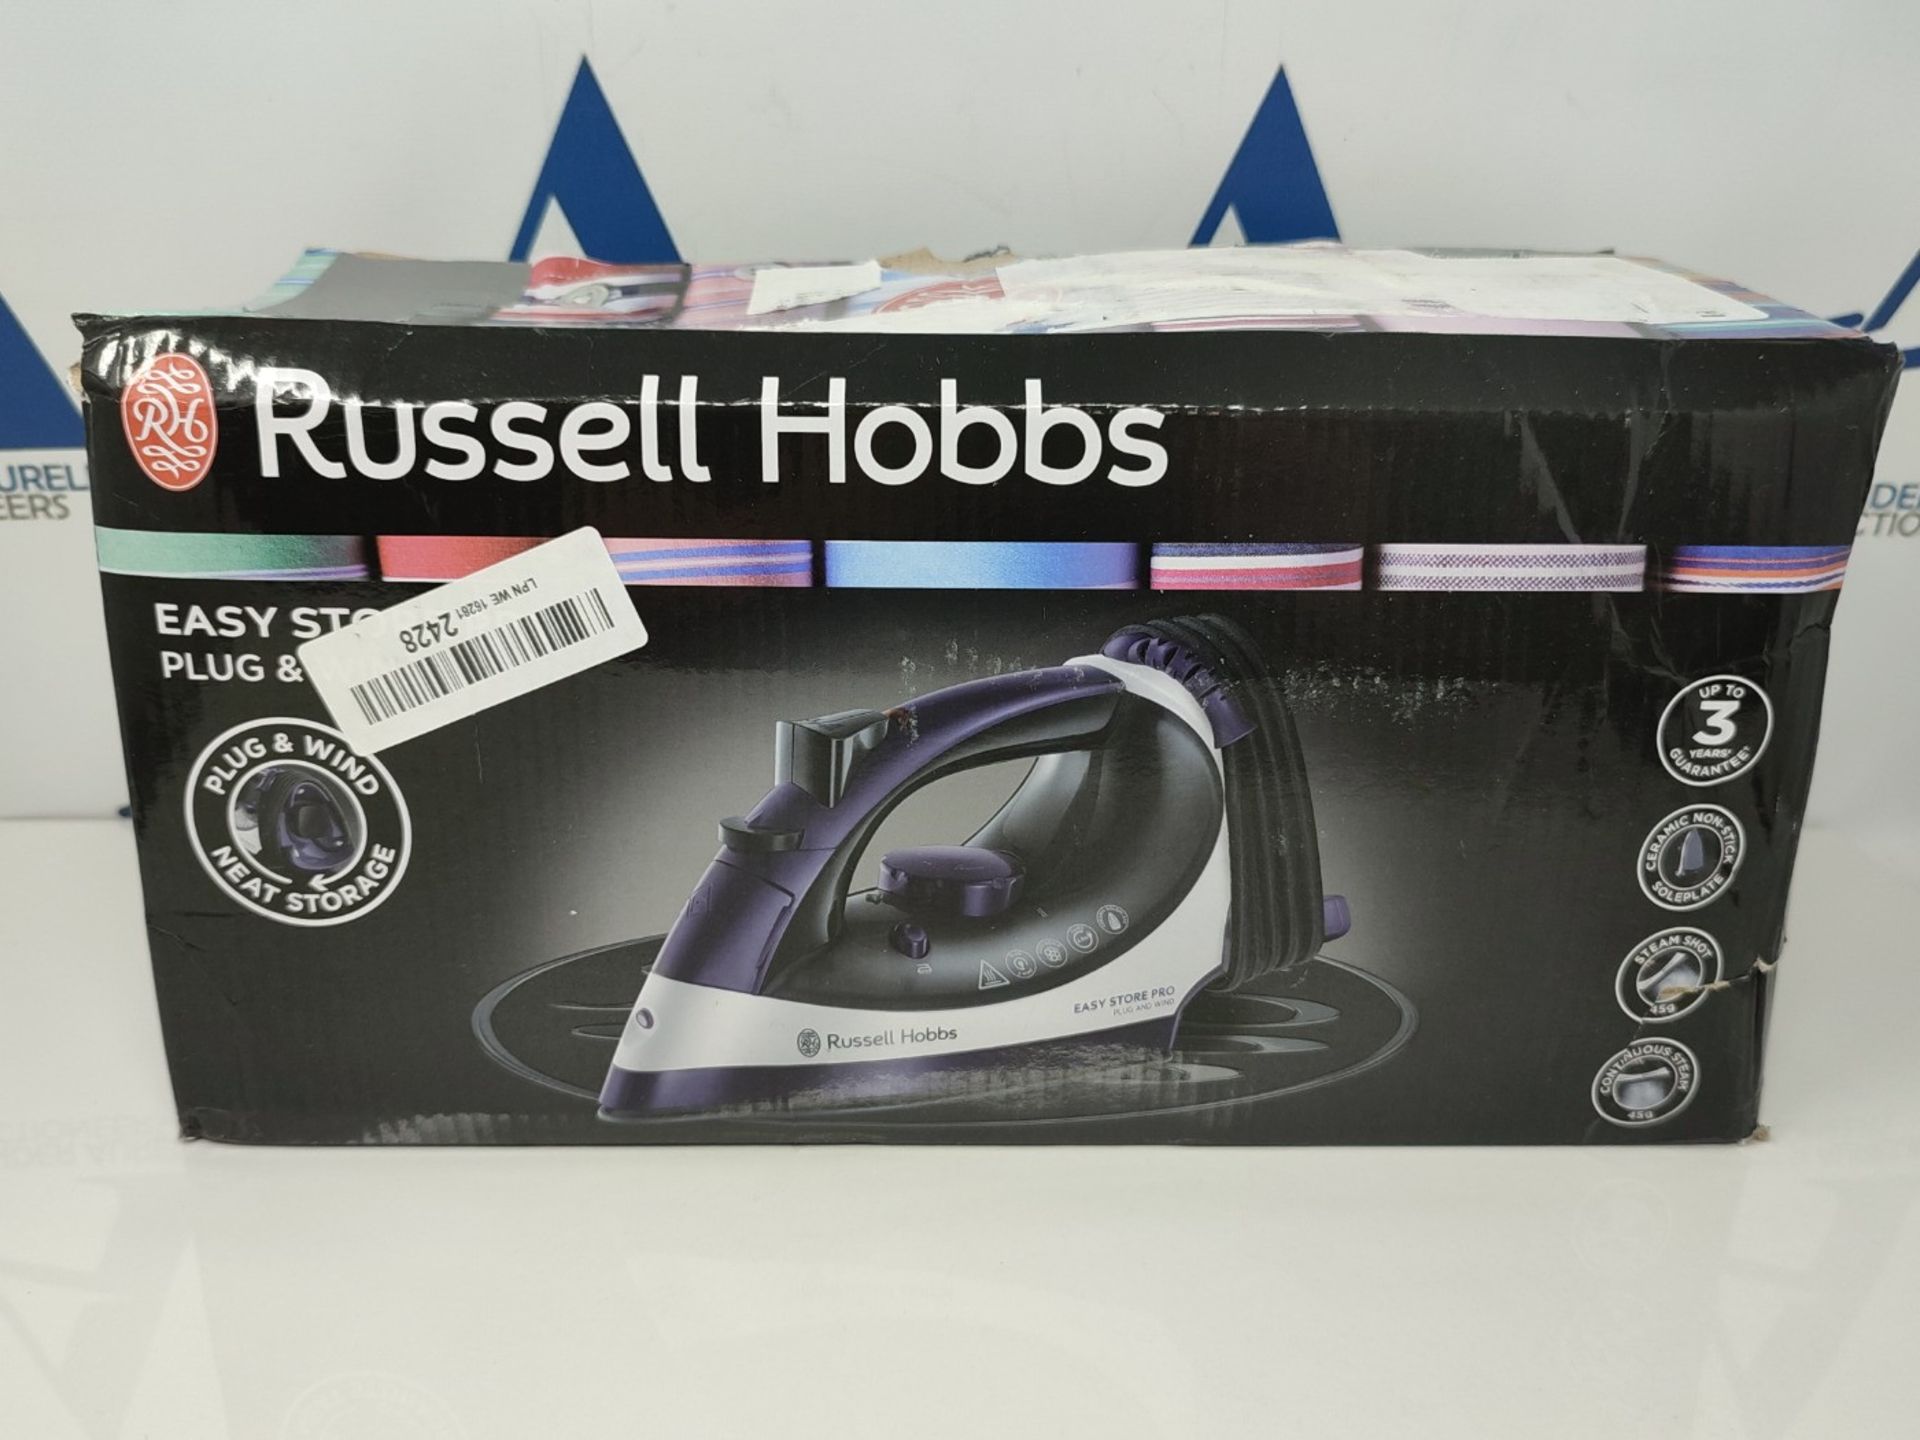 Russell Hobbs 23780 Easy Store Pro, Plug & Wind Iron,Purple,0.330 Litre, 2400 Watt - Image 2 of 3